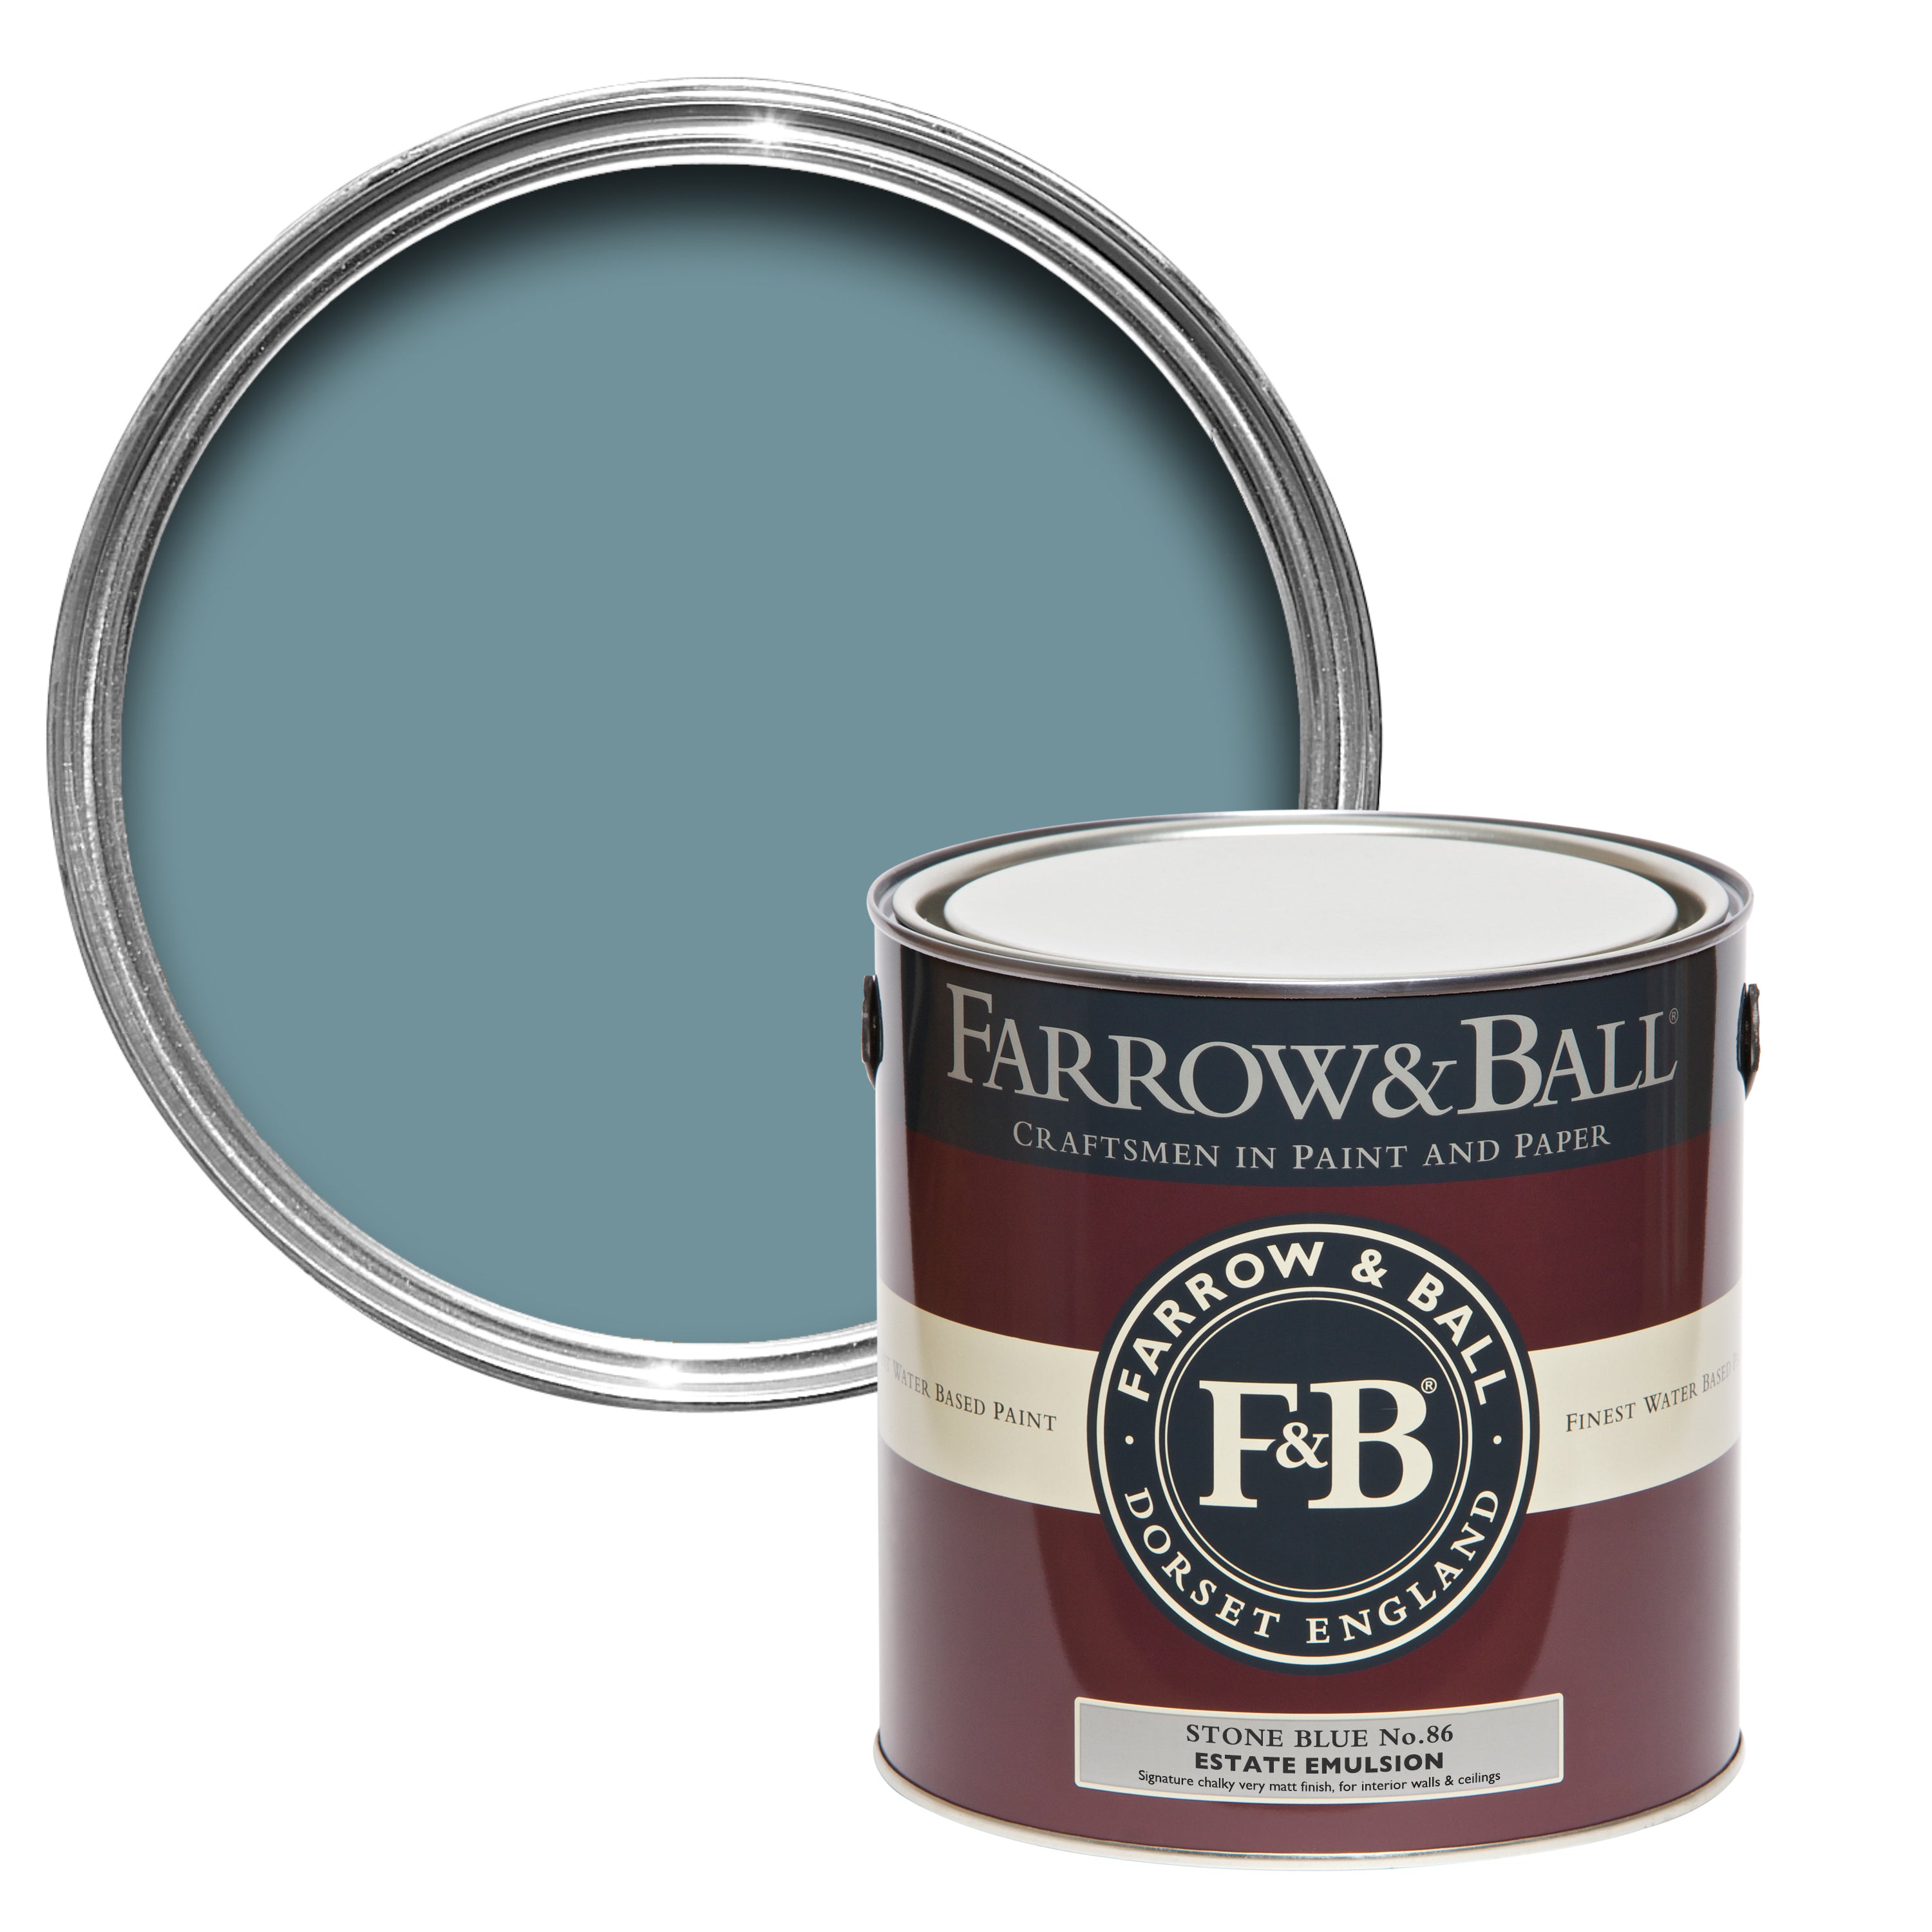 Stone Blue No 86 | Farrow & Ball